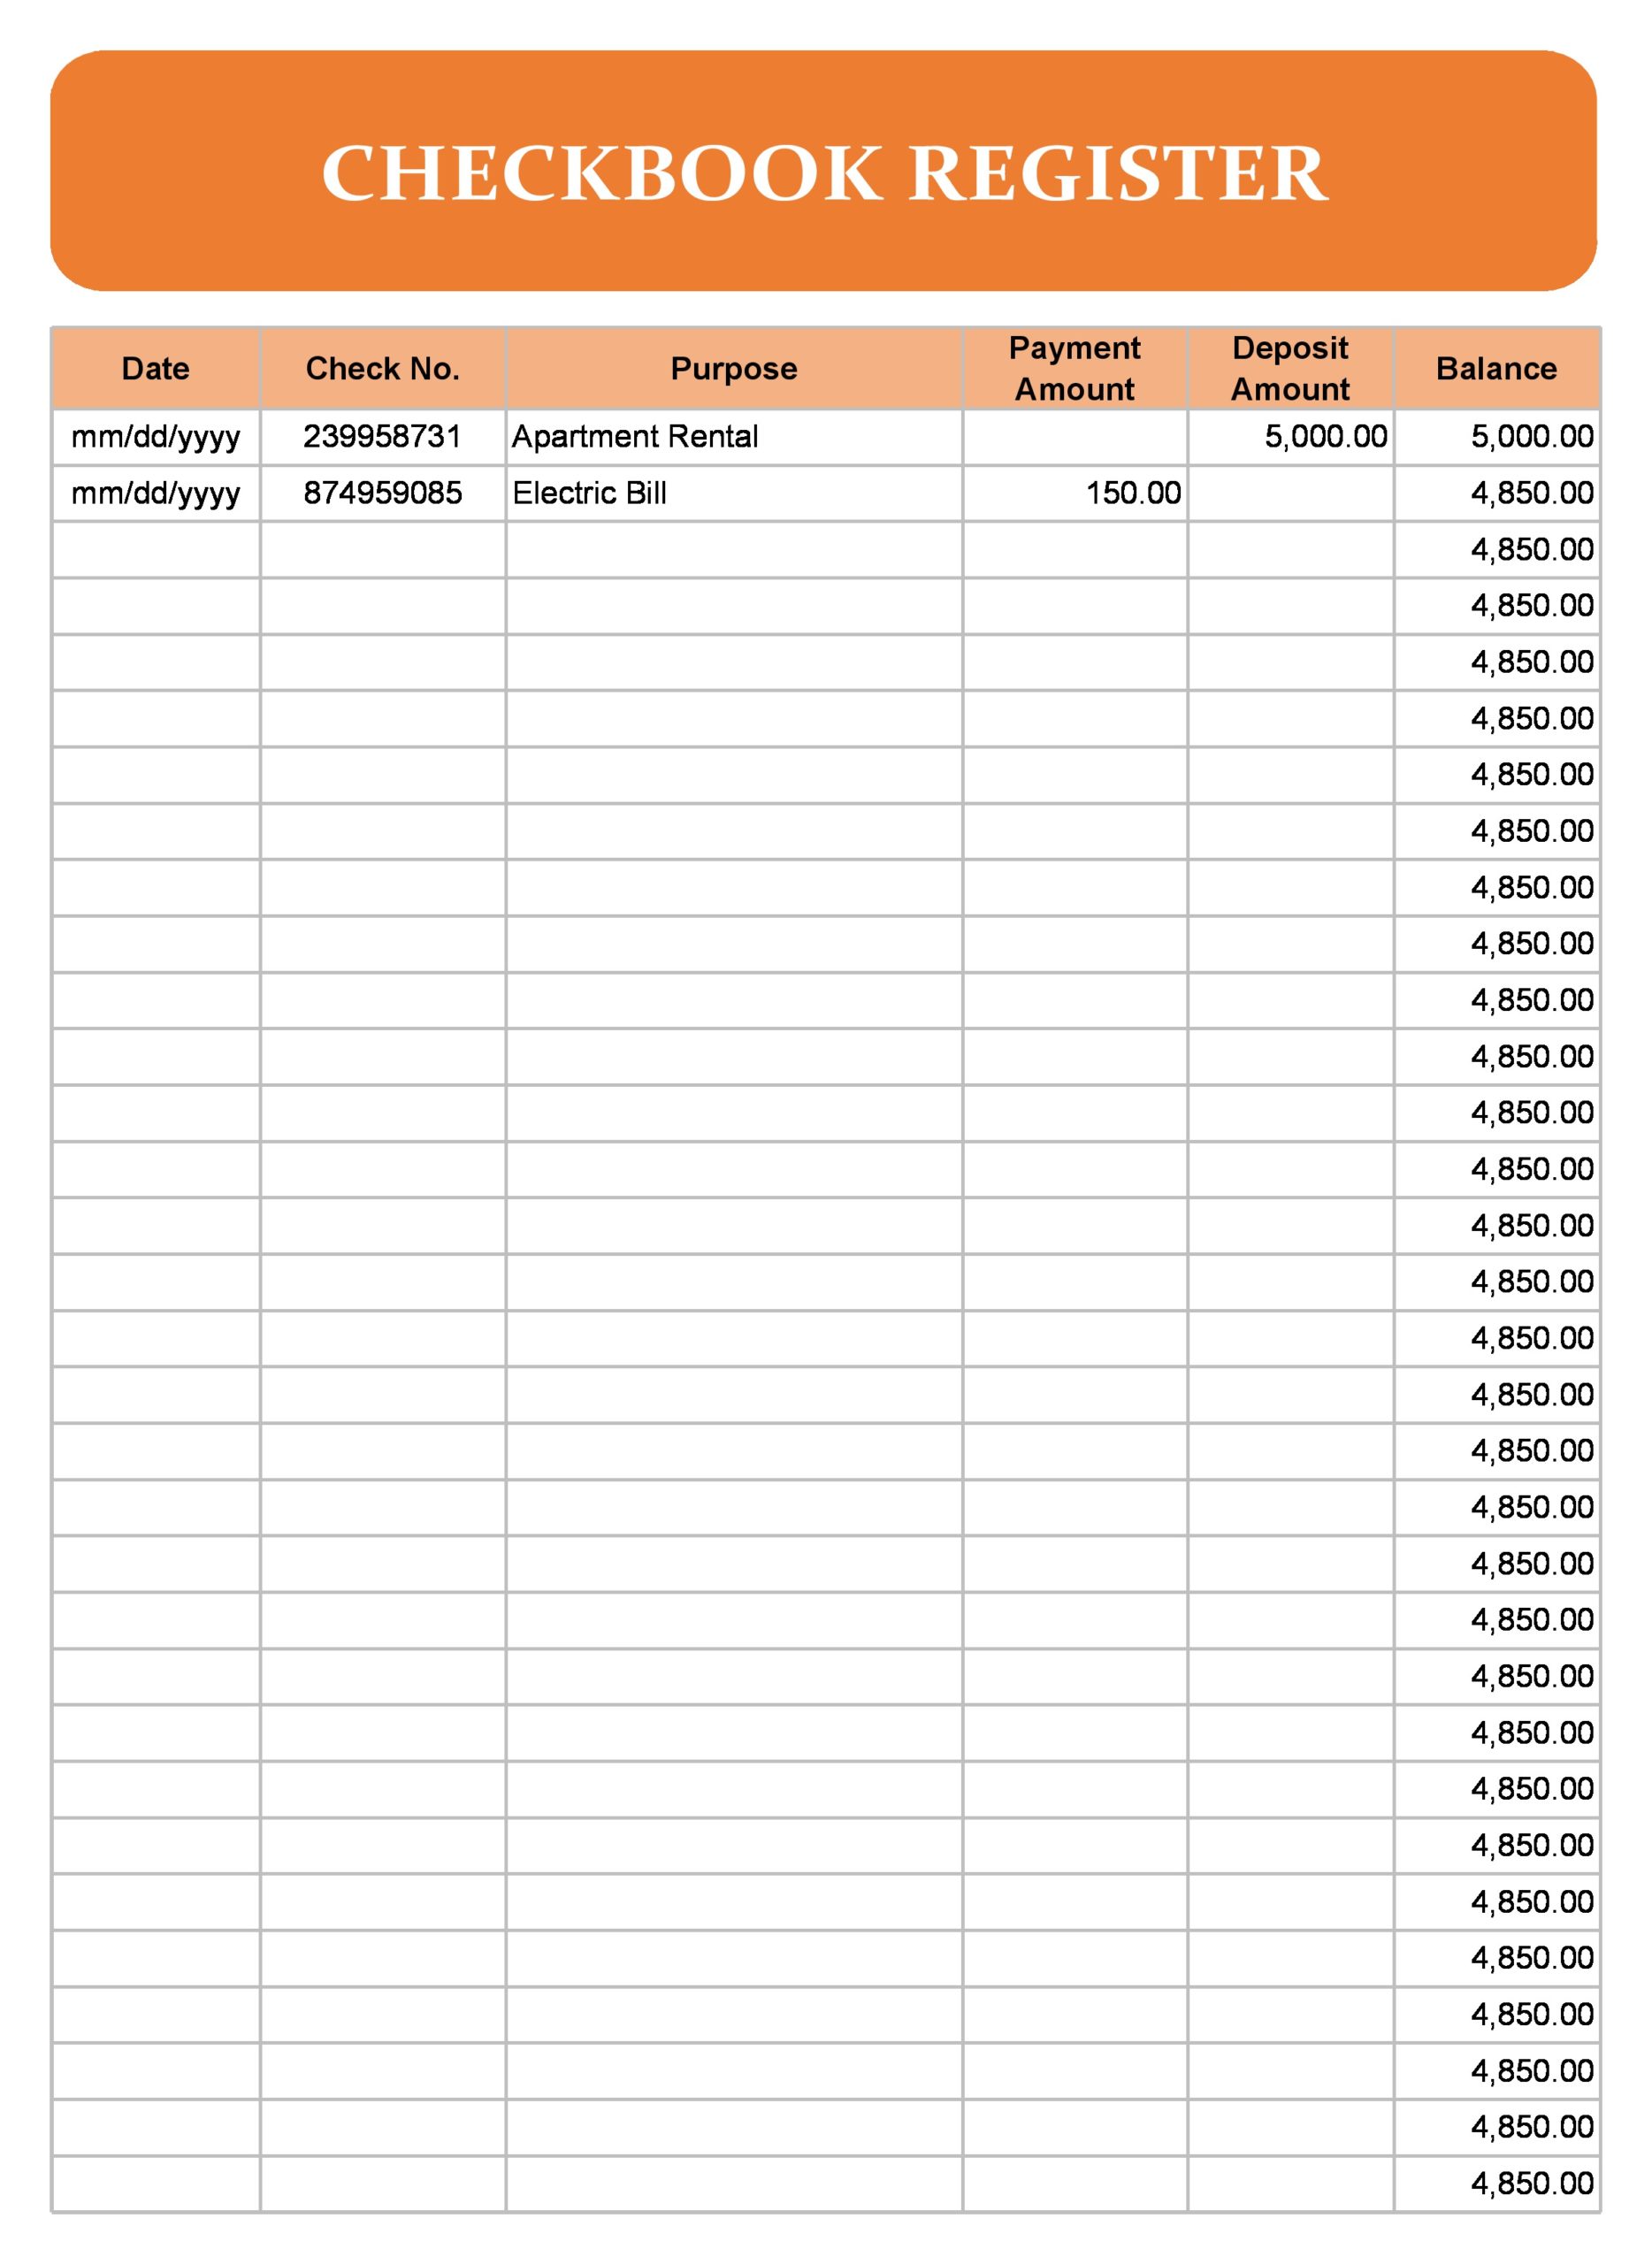 39 Checkbook Register Templates [100 Free, Printable] ᐅ TemplateLab